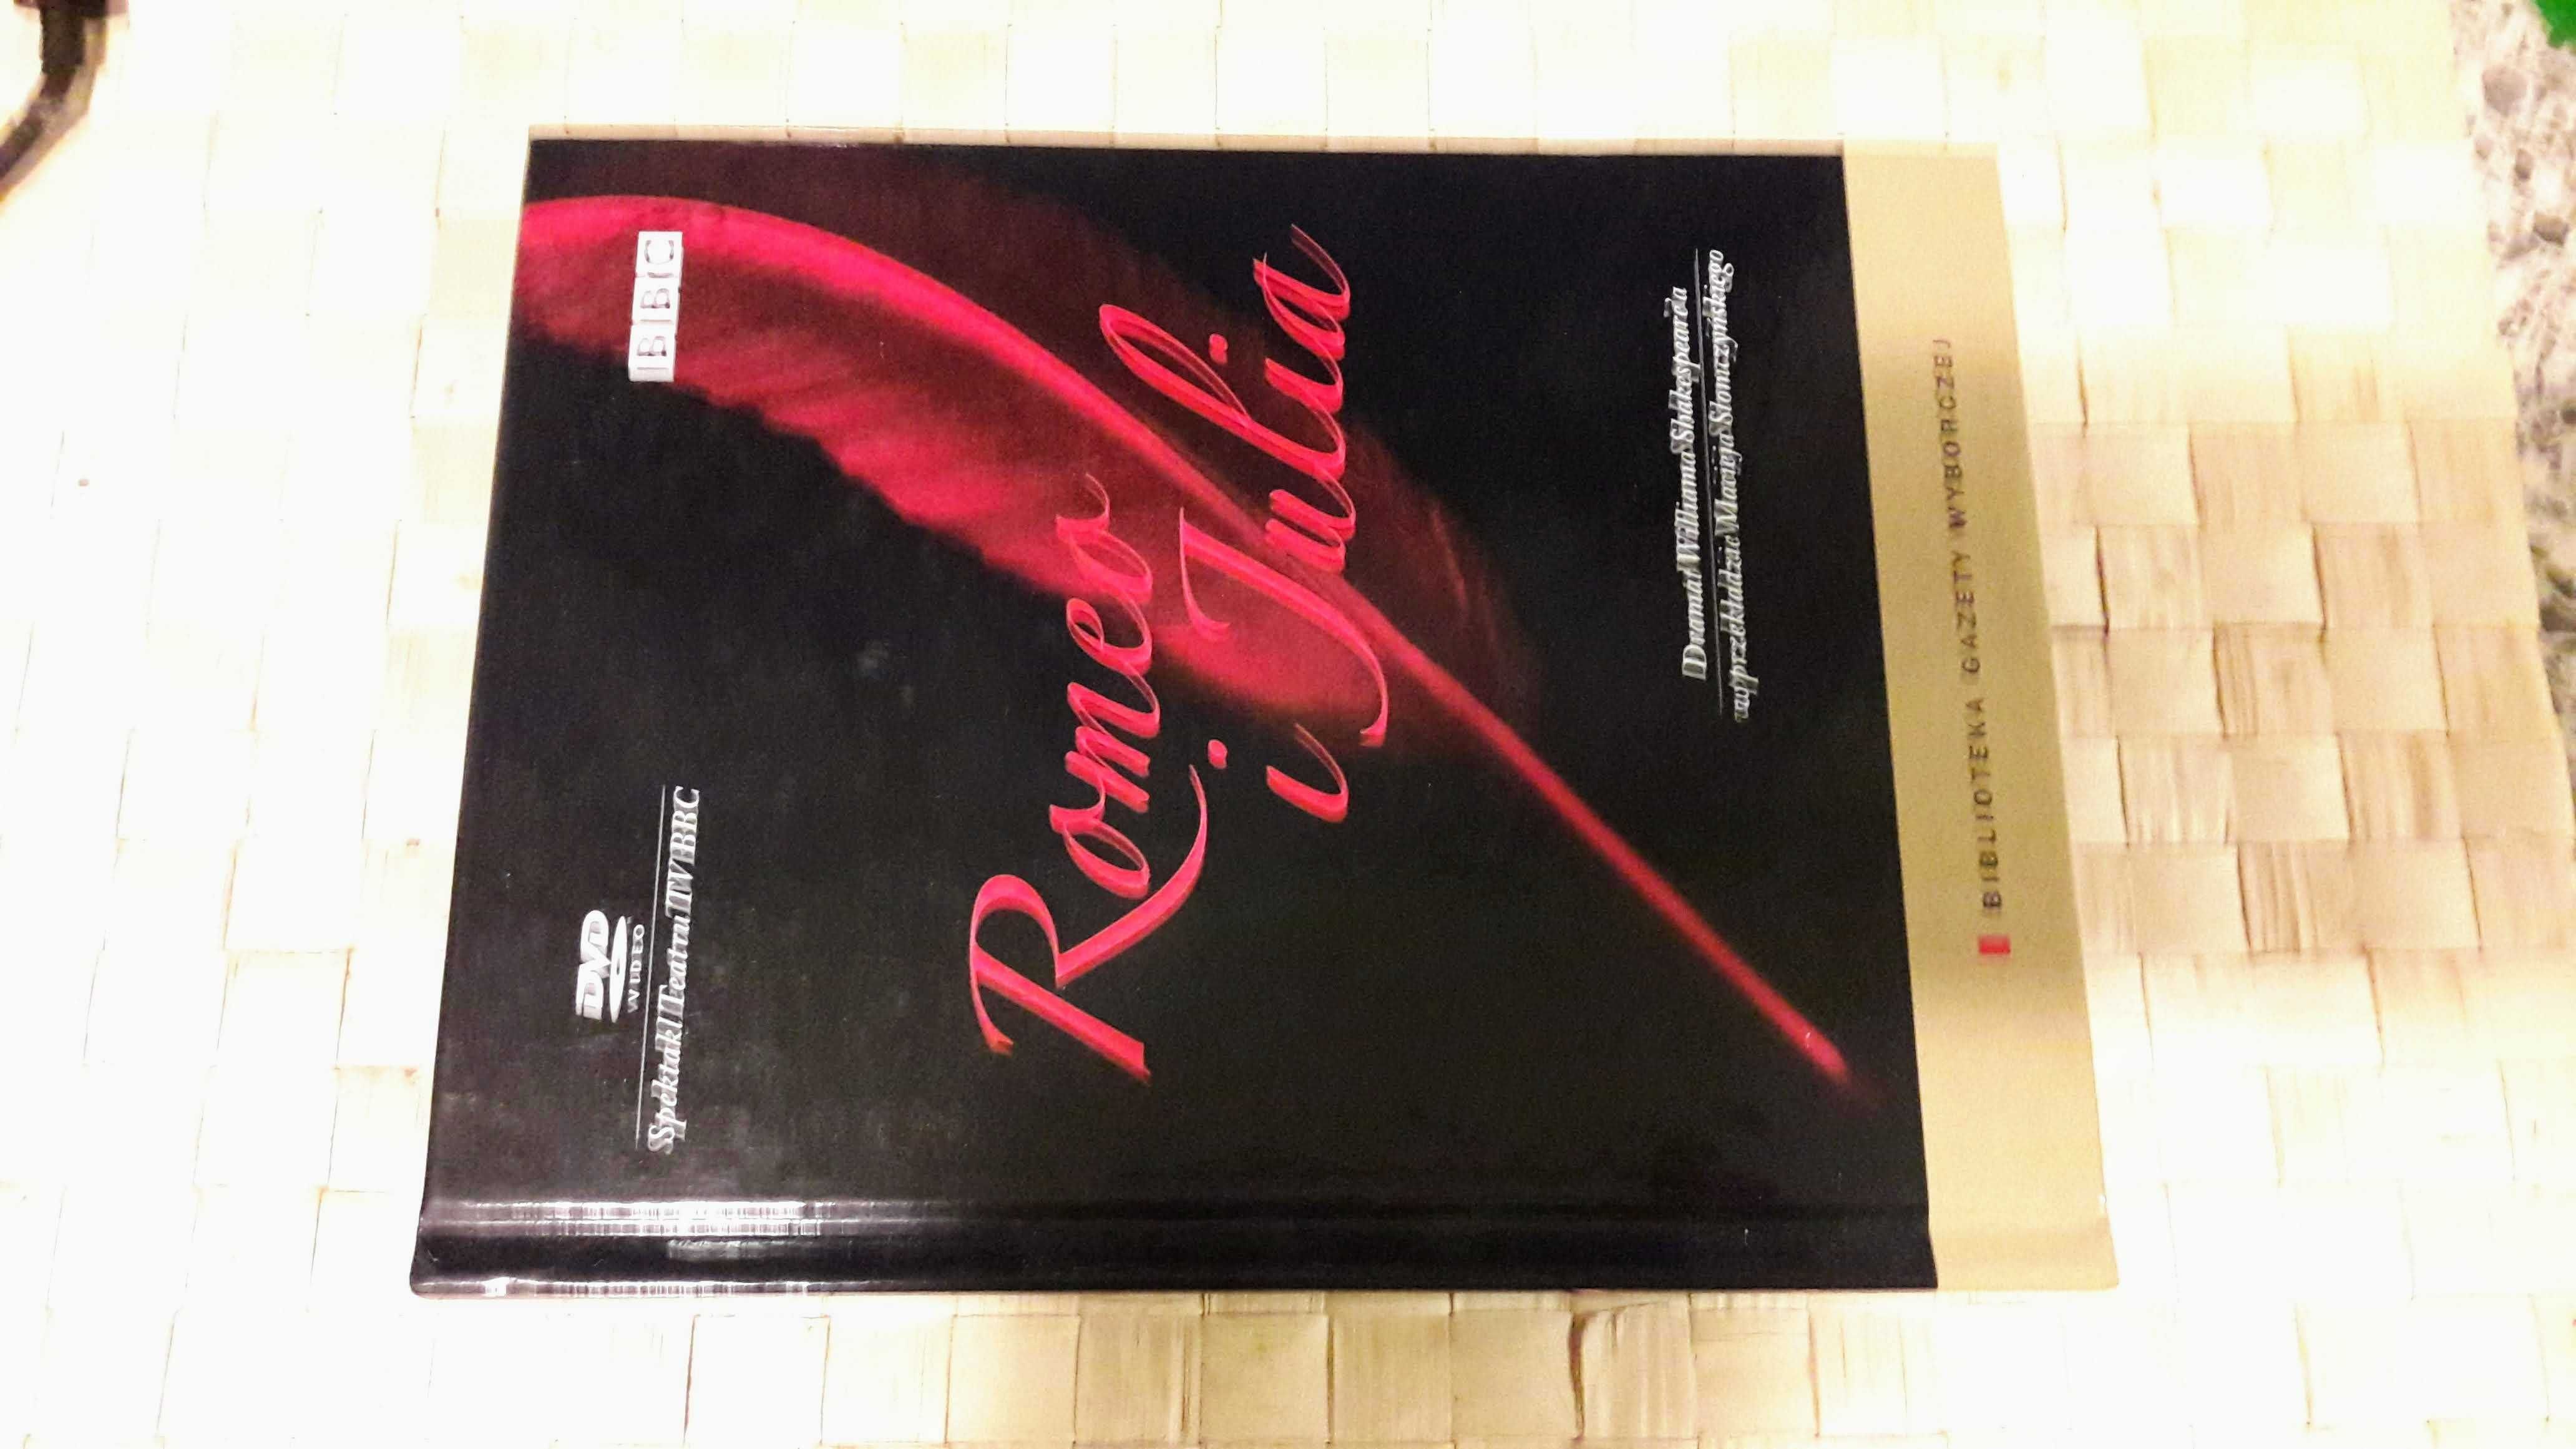 Romeo i Julia płyta DVD Willia Shakespeare